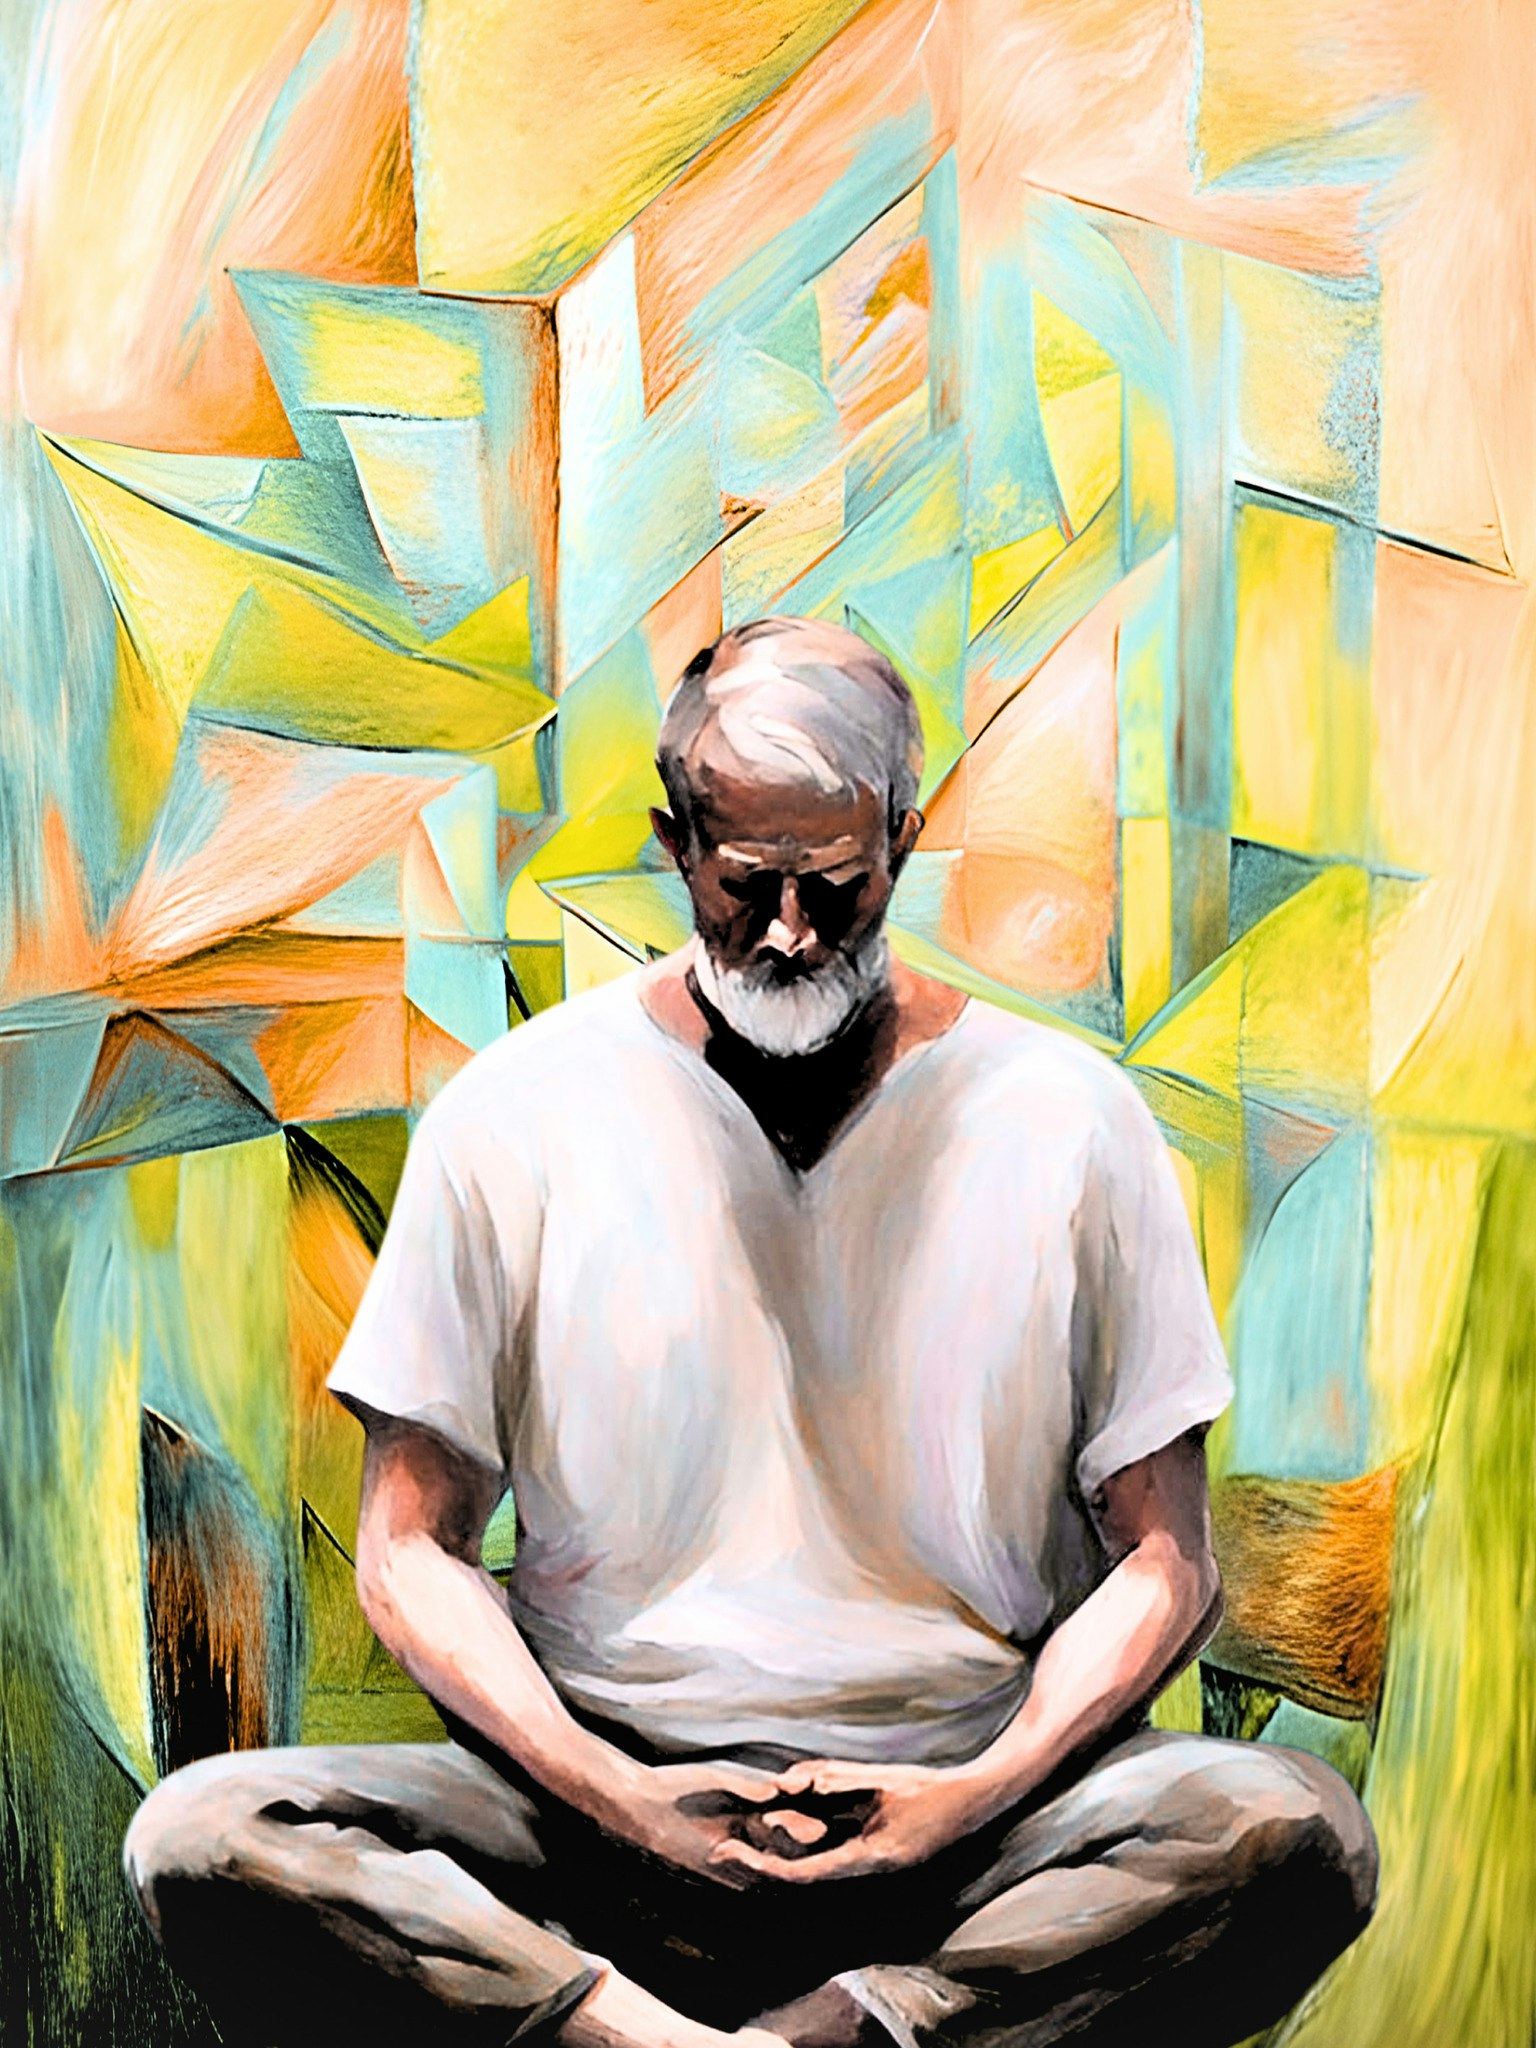 Graphic Art "Man in meditation"